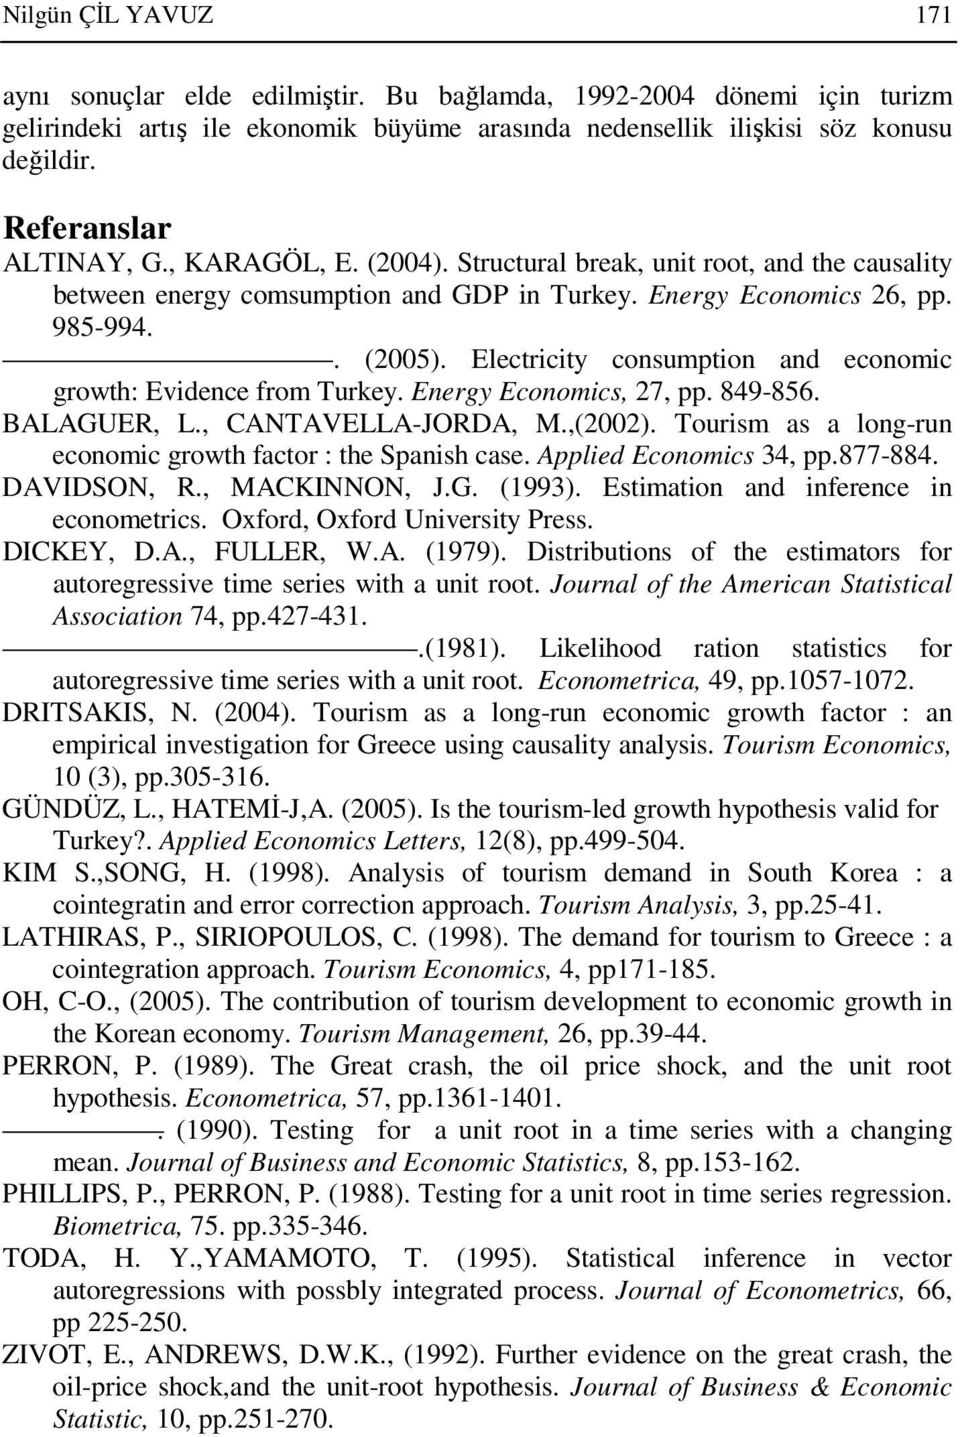 Elecriciy consumpion and economic growh: Evidence from Turey. Energy Economics, 27, pp. 849-856. BALAGUER, L., CANTAVELLA-JORDA, M.,(2002).